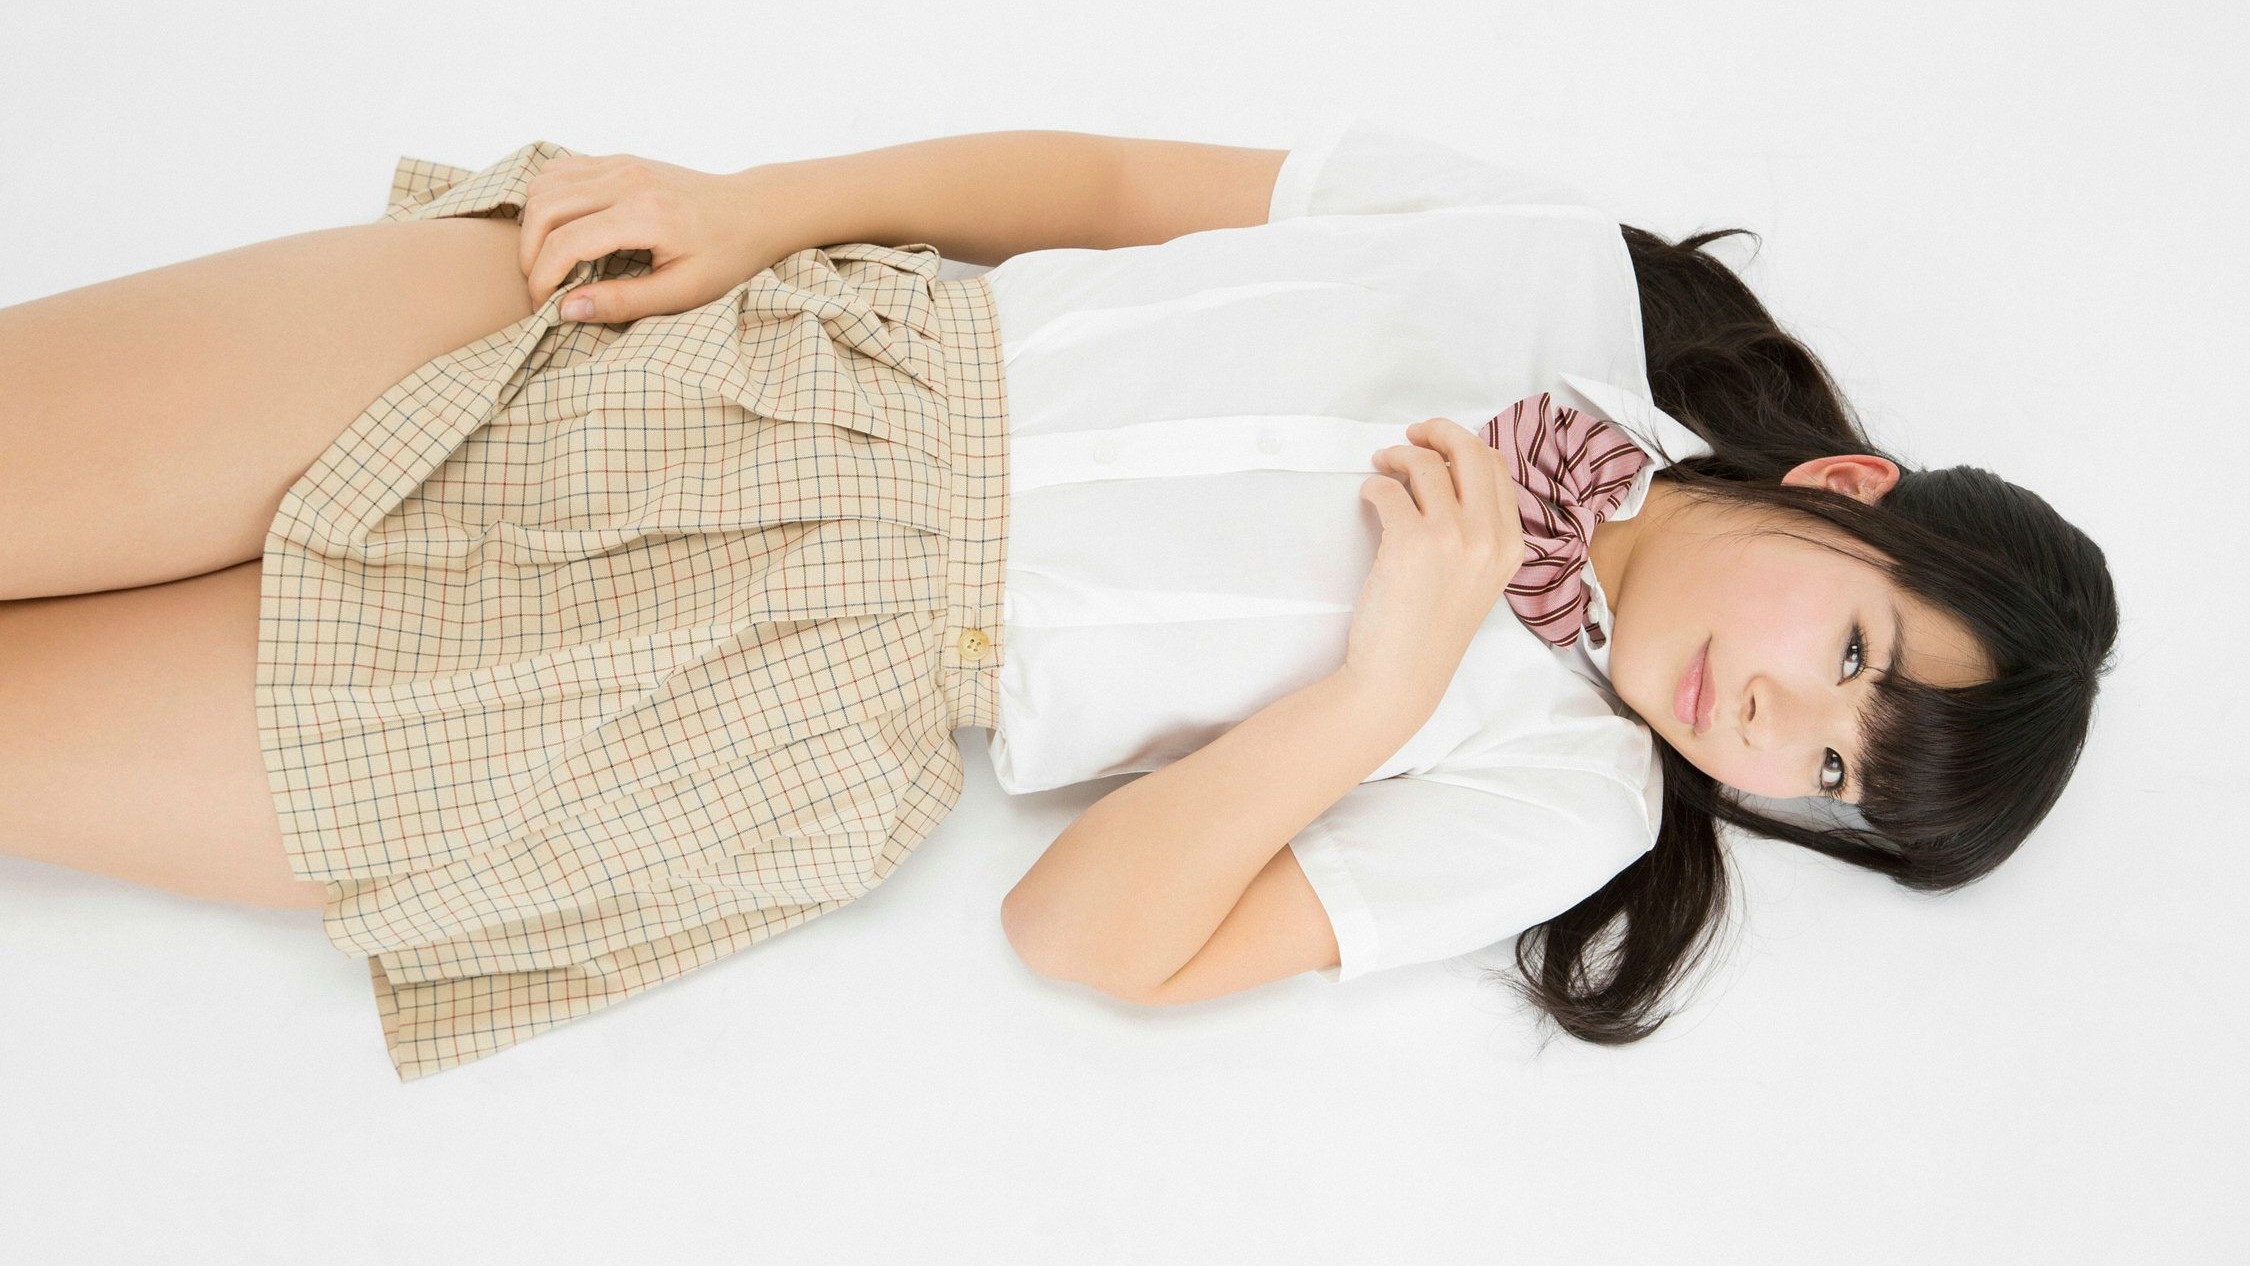 Jun Sherizawa Pleated Skirt Schoolgirl Japanese Model School Uniform Smiling Socks White Shirt White 2250x1266